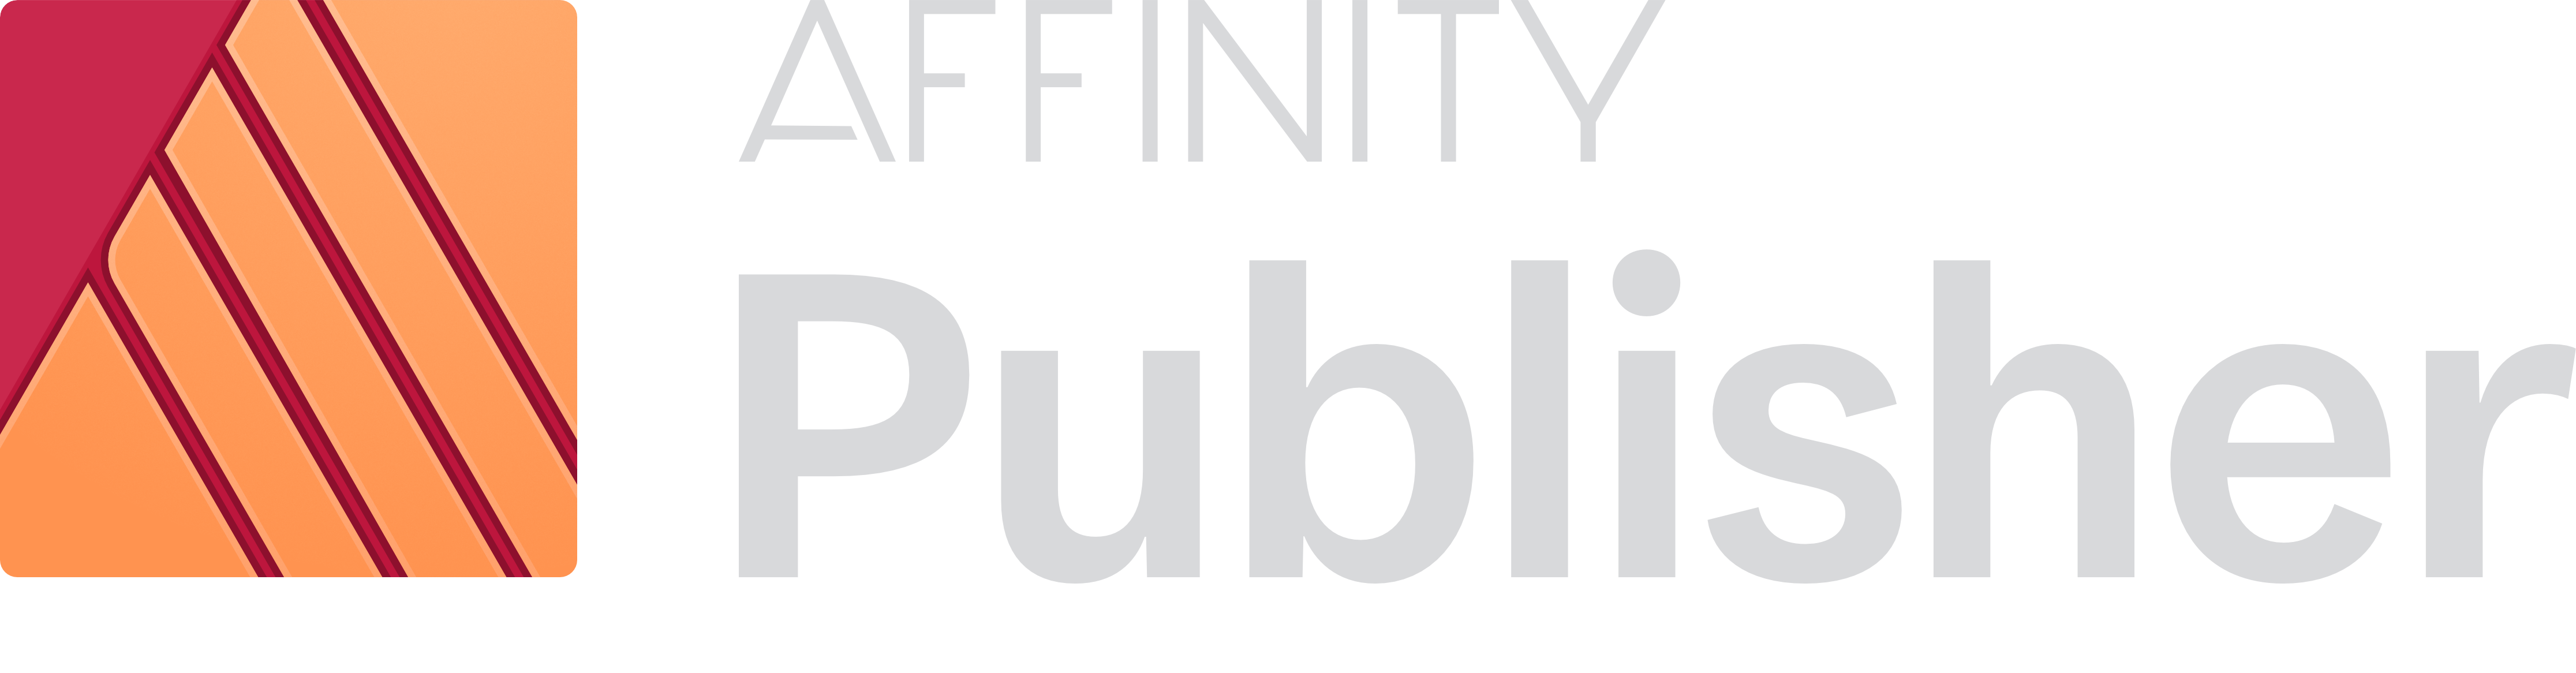 Affinity Piublisherr logo  en Compolaser